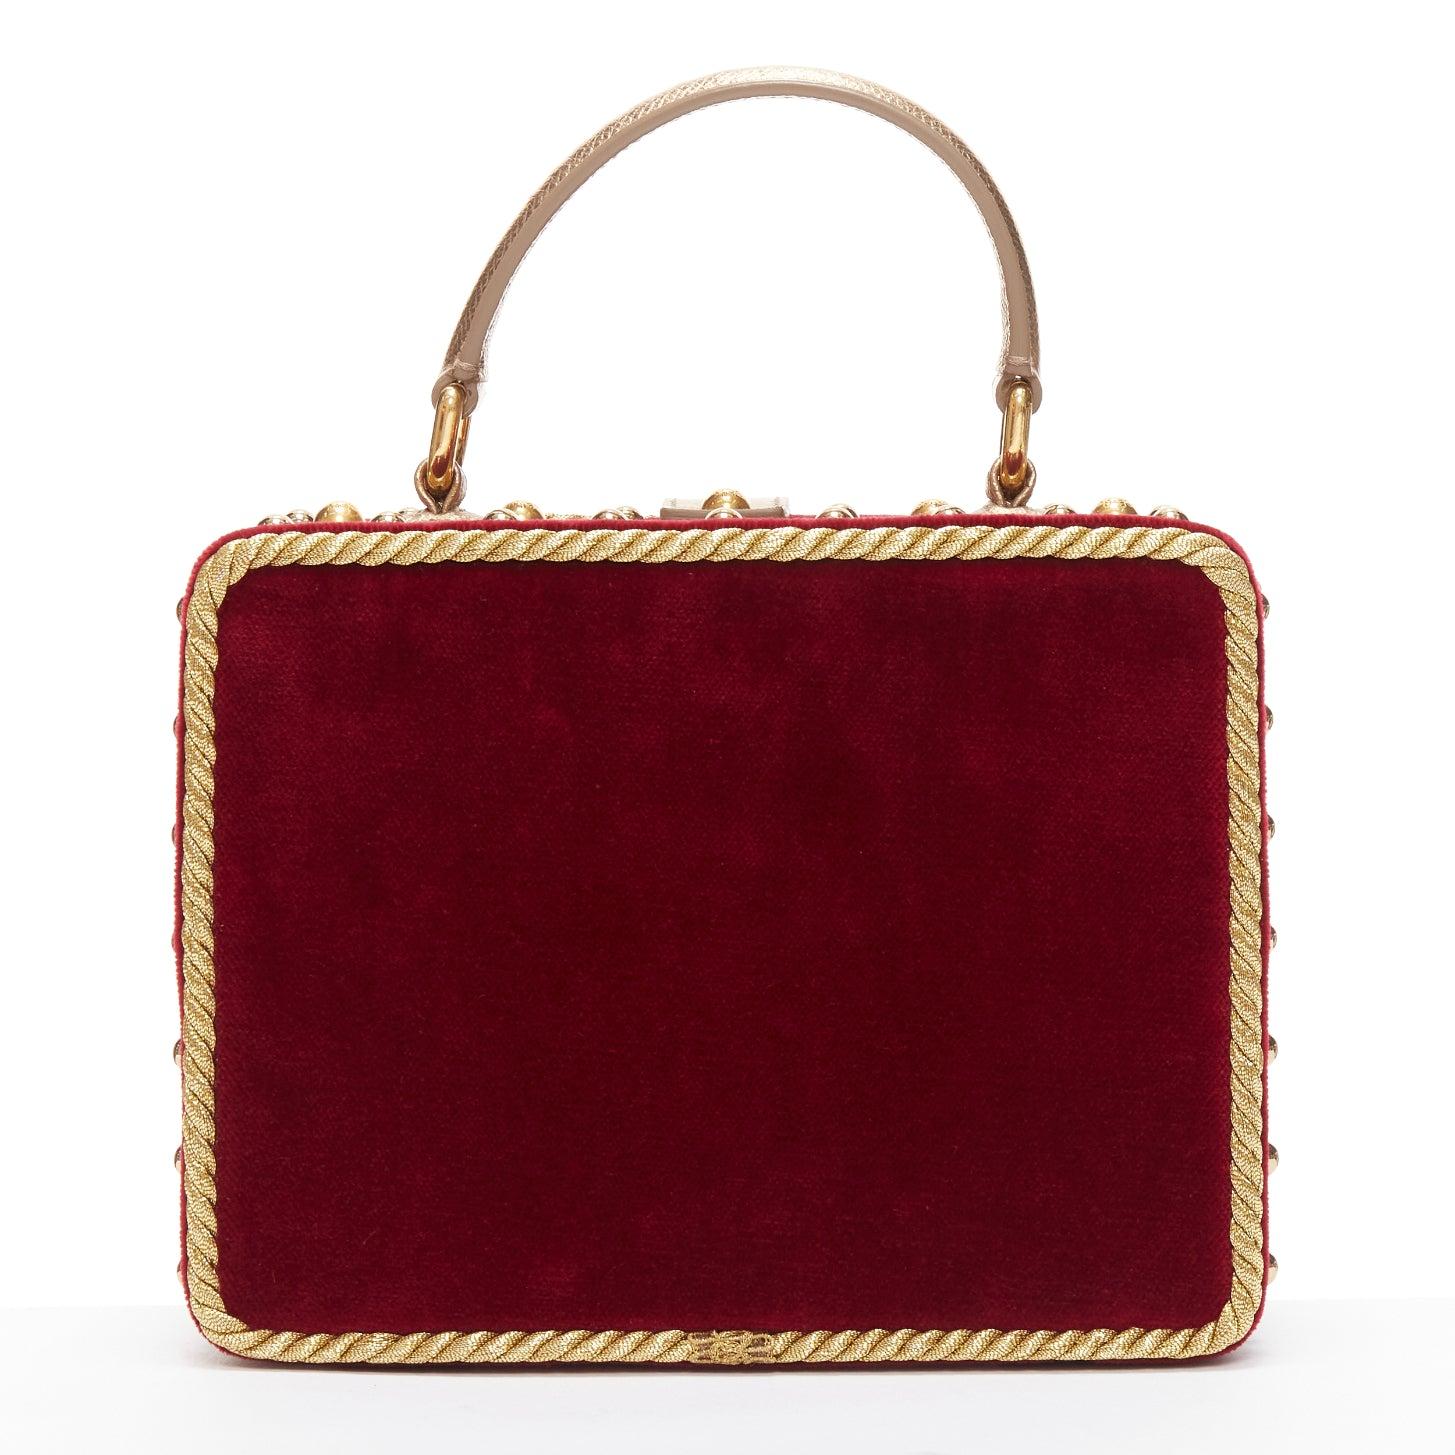 DOLCE GABBANA Santa Borsa gold baroque trim cherub print vanity box shoulder bag For Sale 1